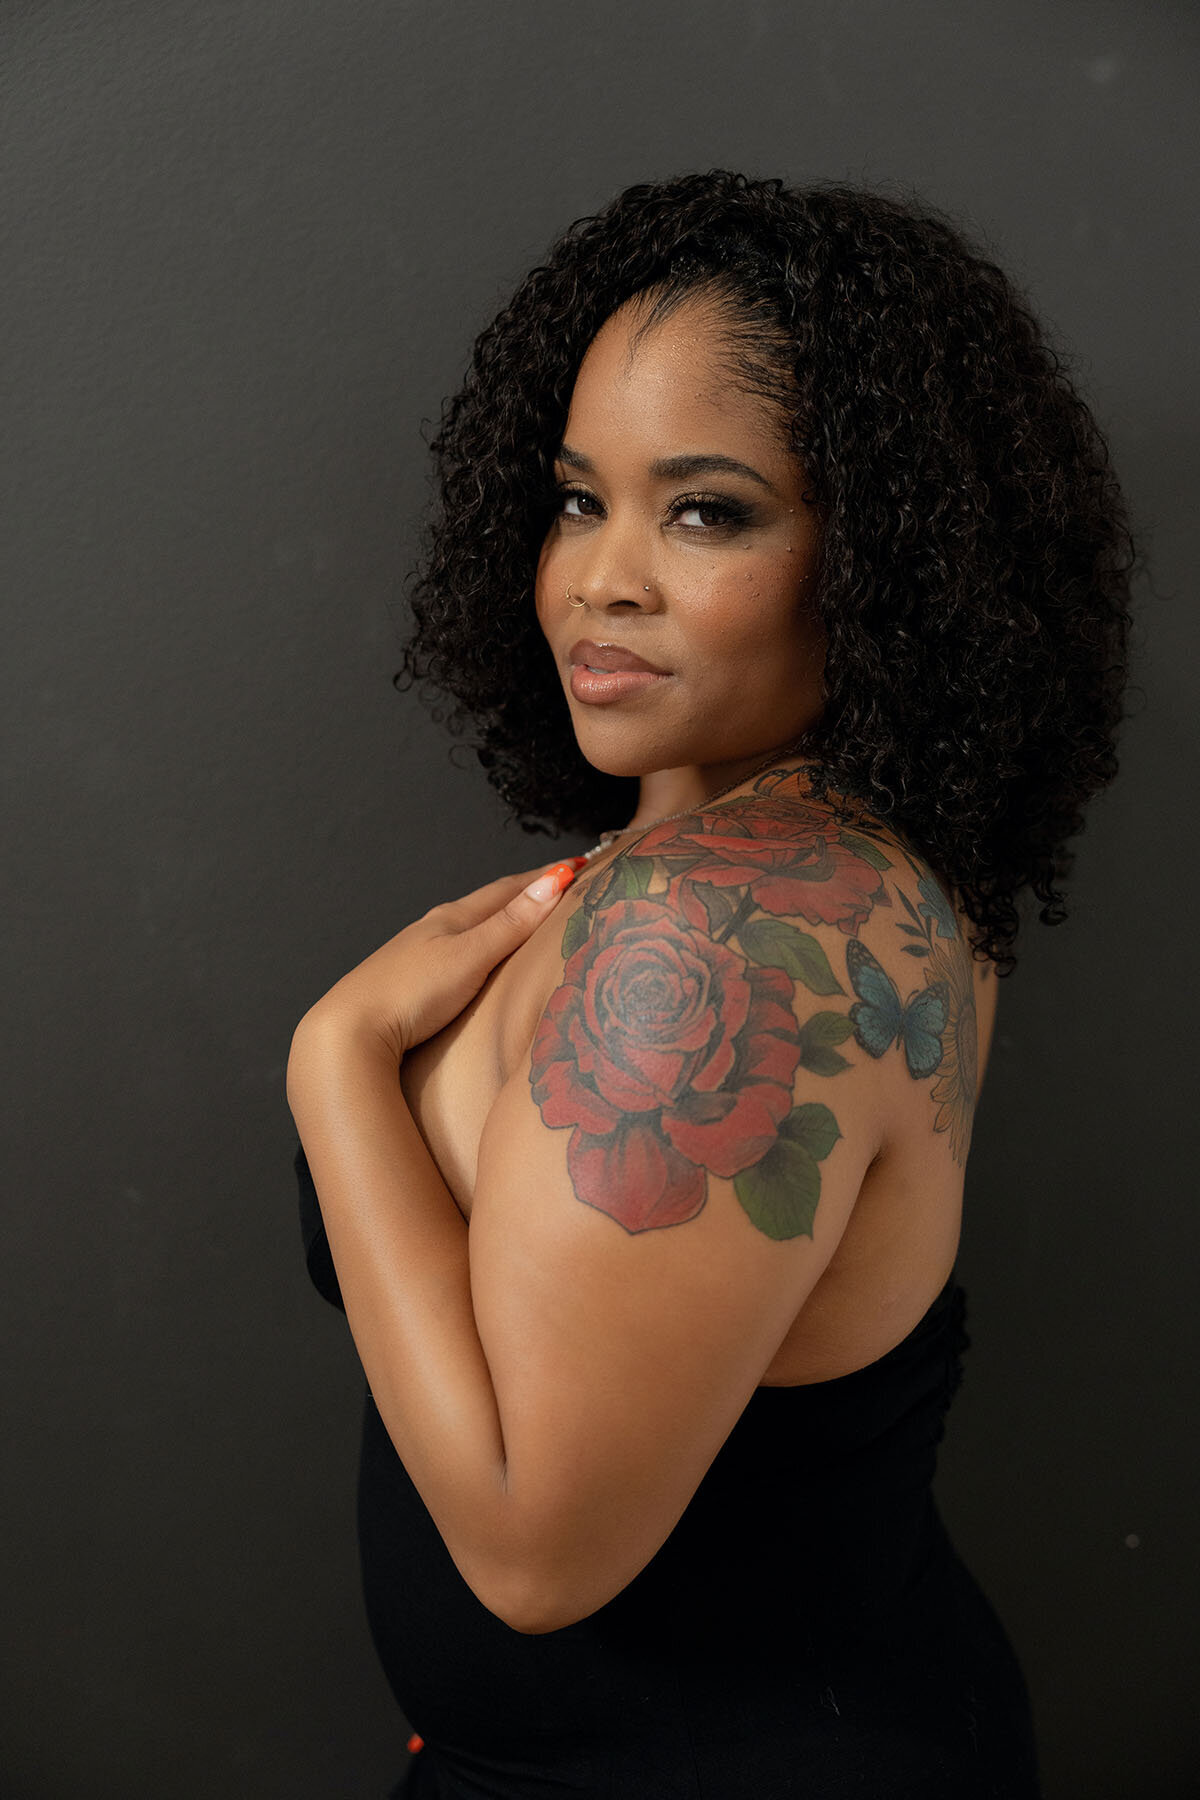 Dark skinned woman with tattoos posing against black backdrop